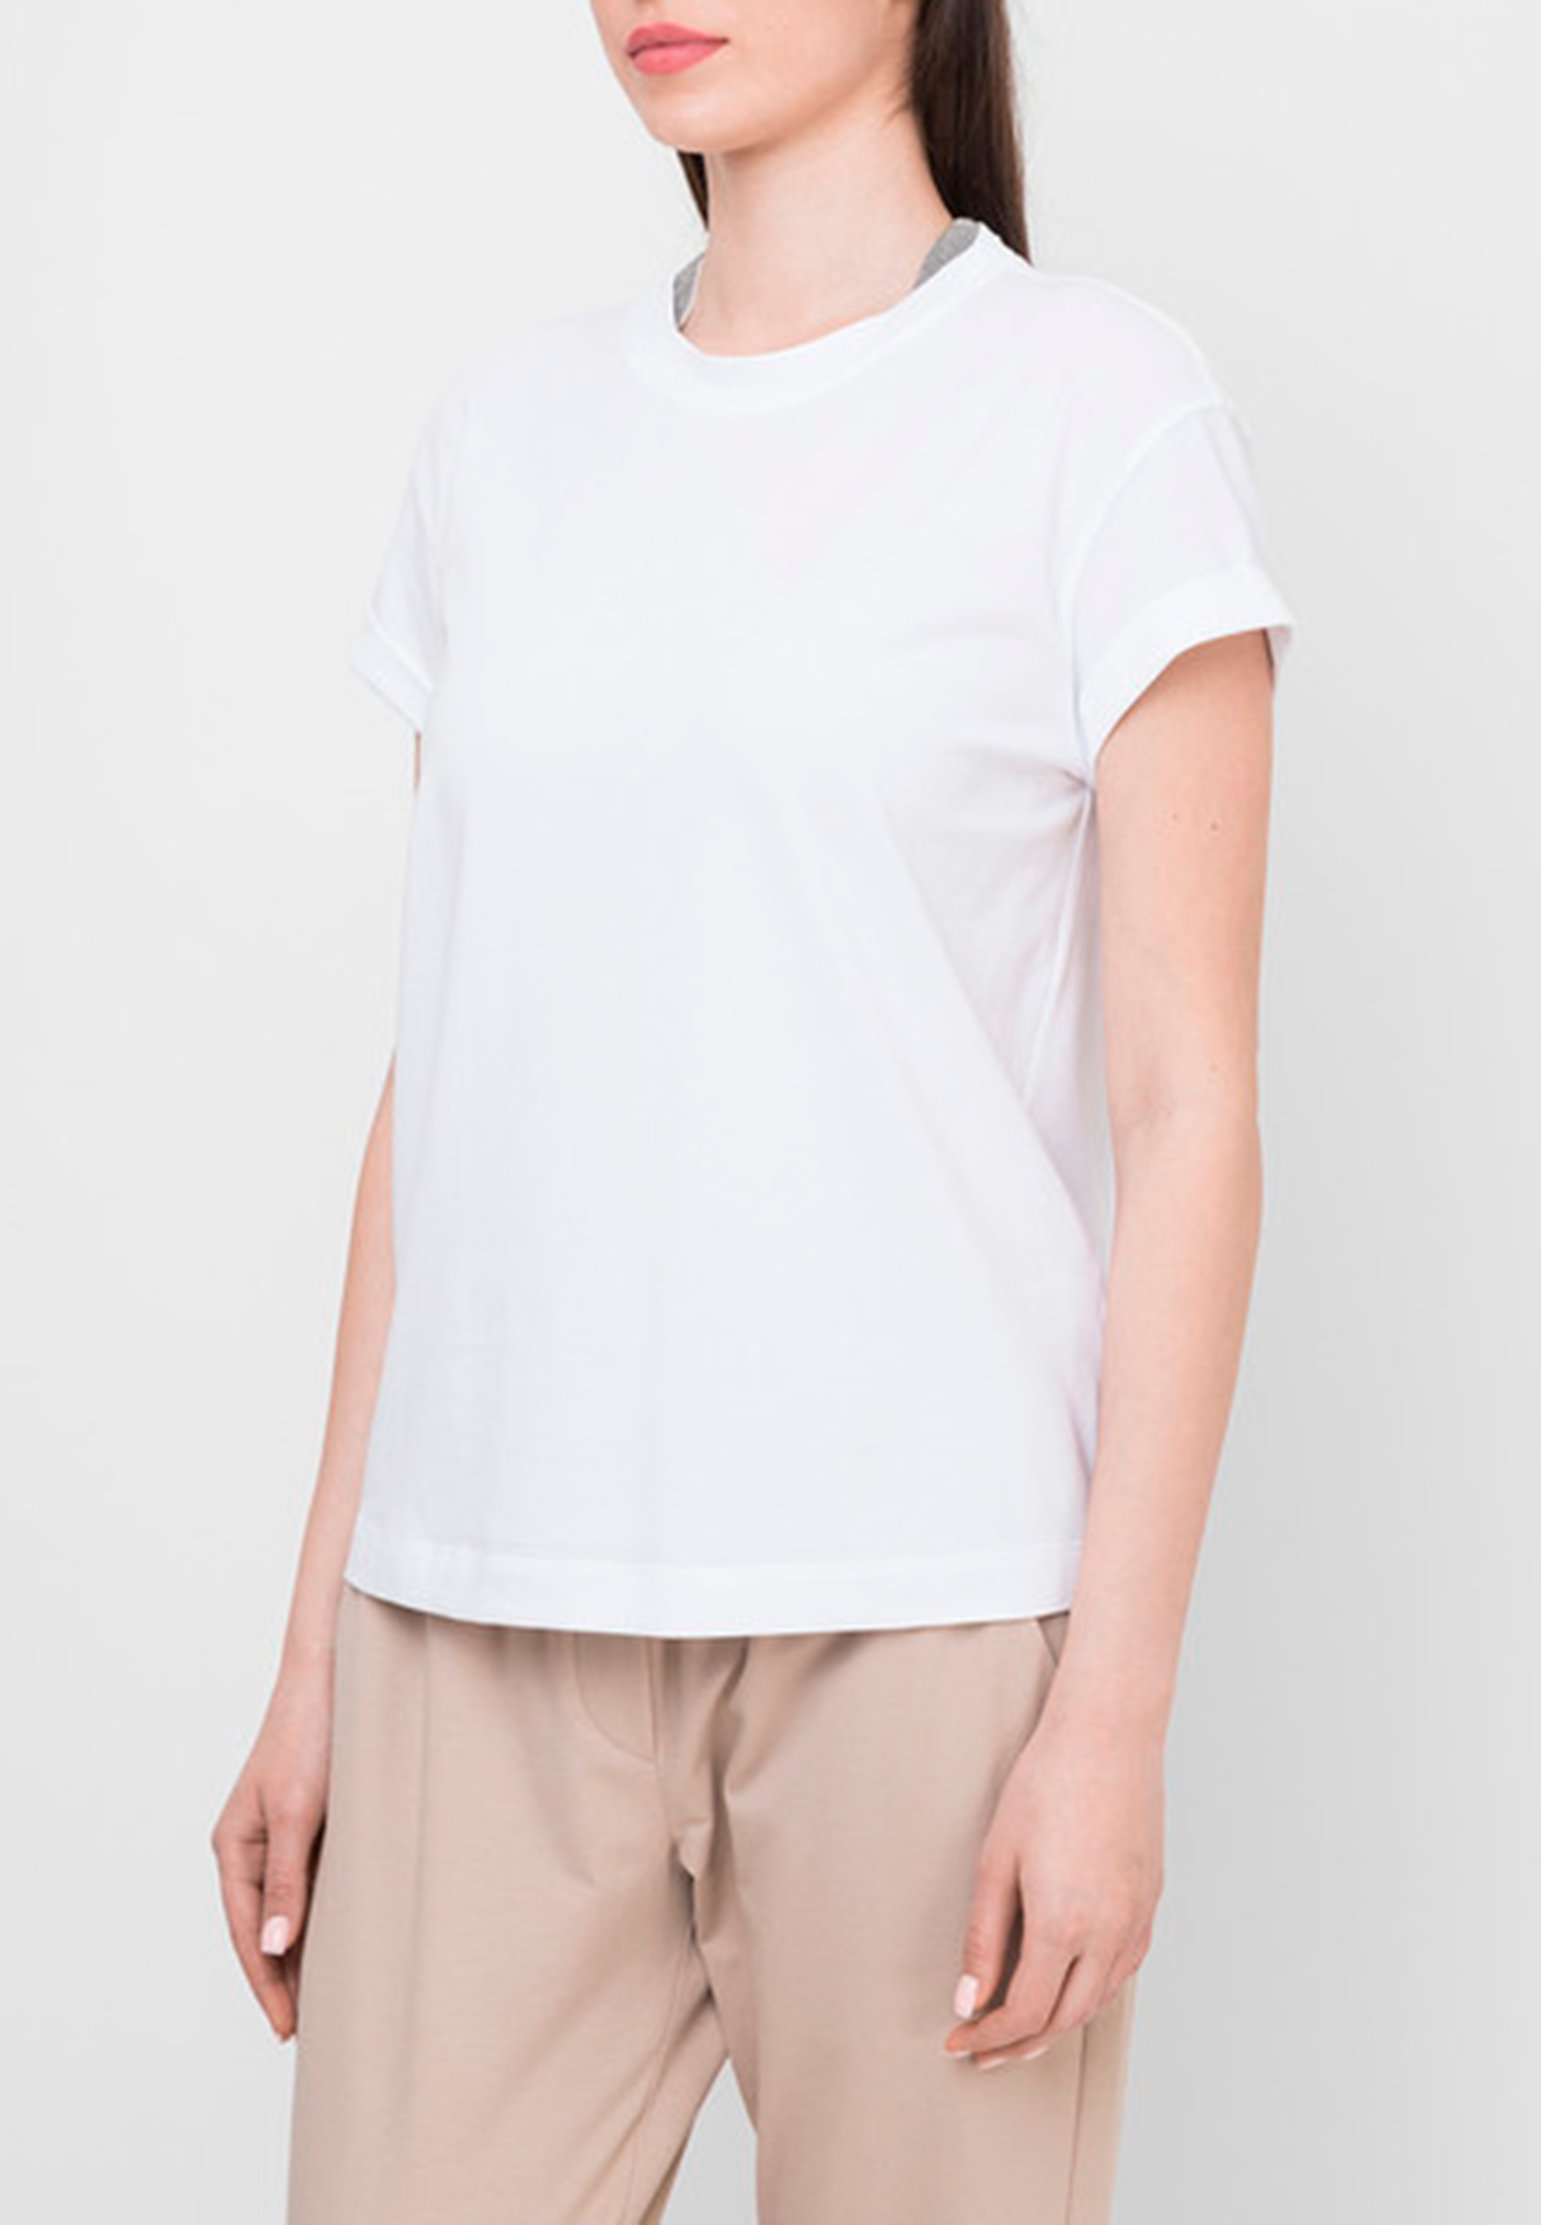 T-Shirt BRUNELLO CUCINELLI Color: white (Code: 267) in online store Allure